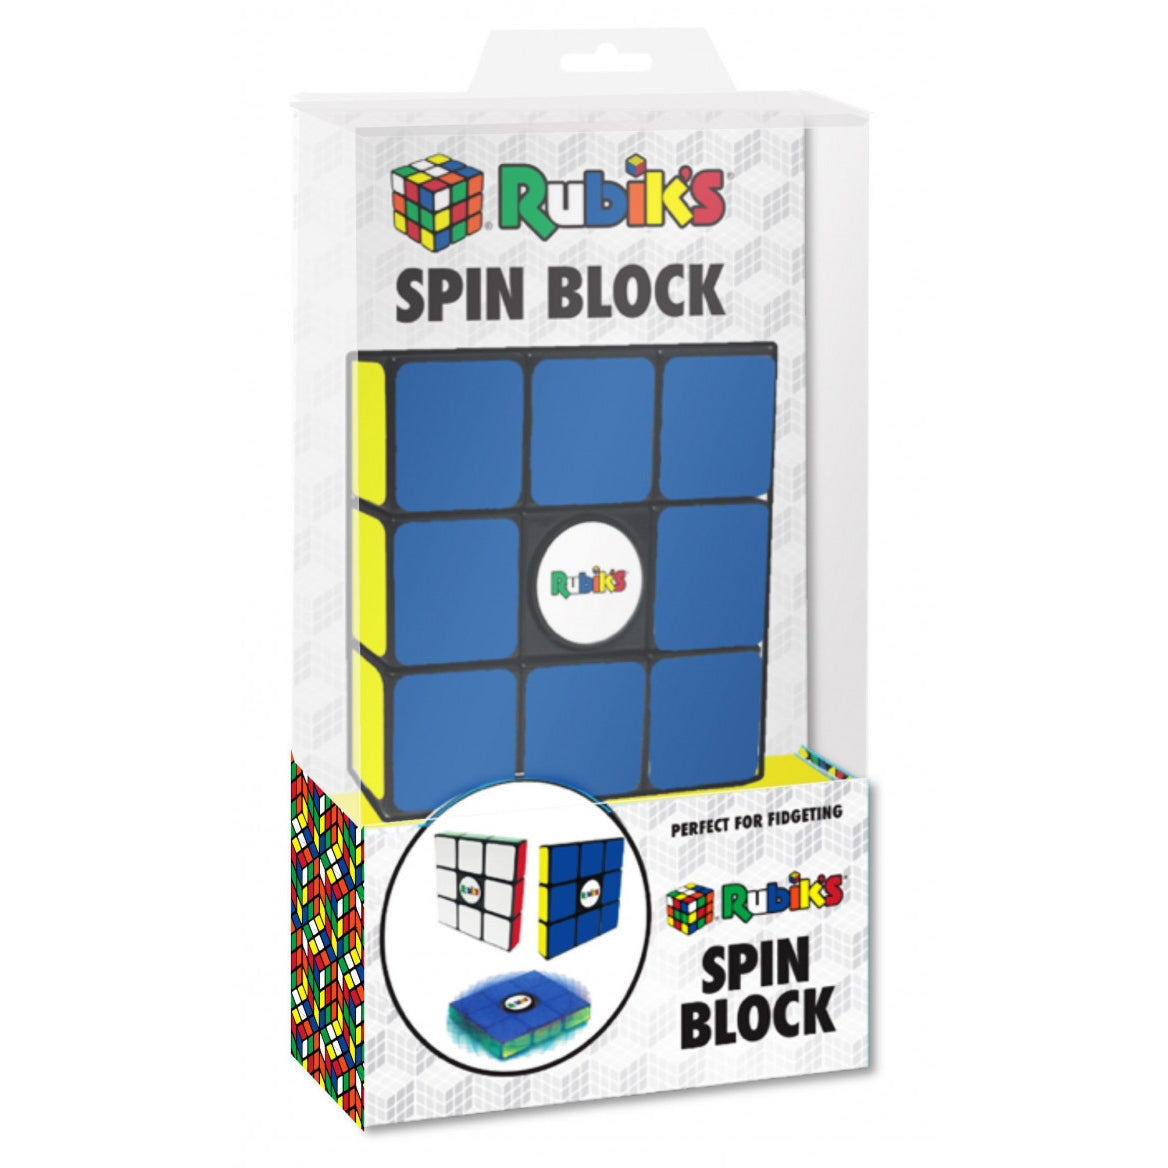 Rubiks Spin Block (Blue)